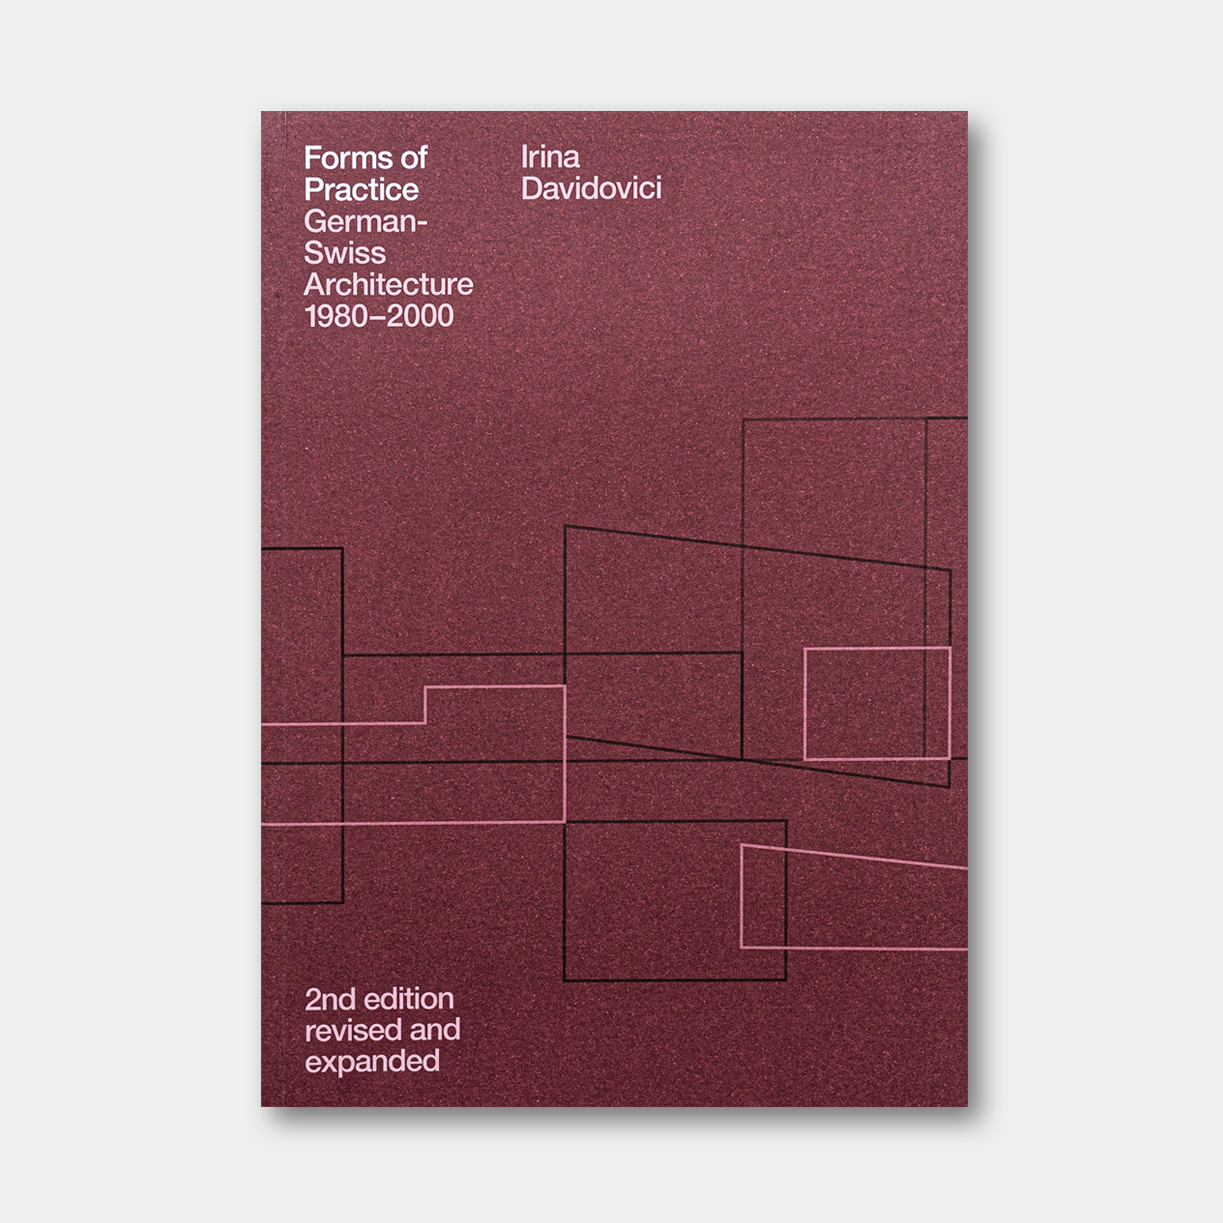 瑞士原版 | 实践的形式：瑞士德语区建筑1980—2000 Forms of Practice German-Swiss Architecture 1980-2000